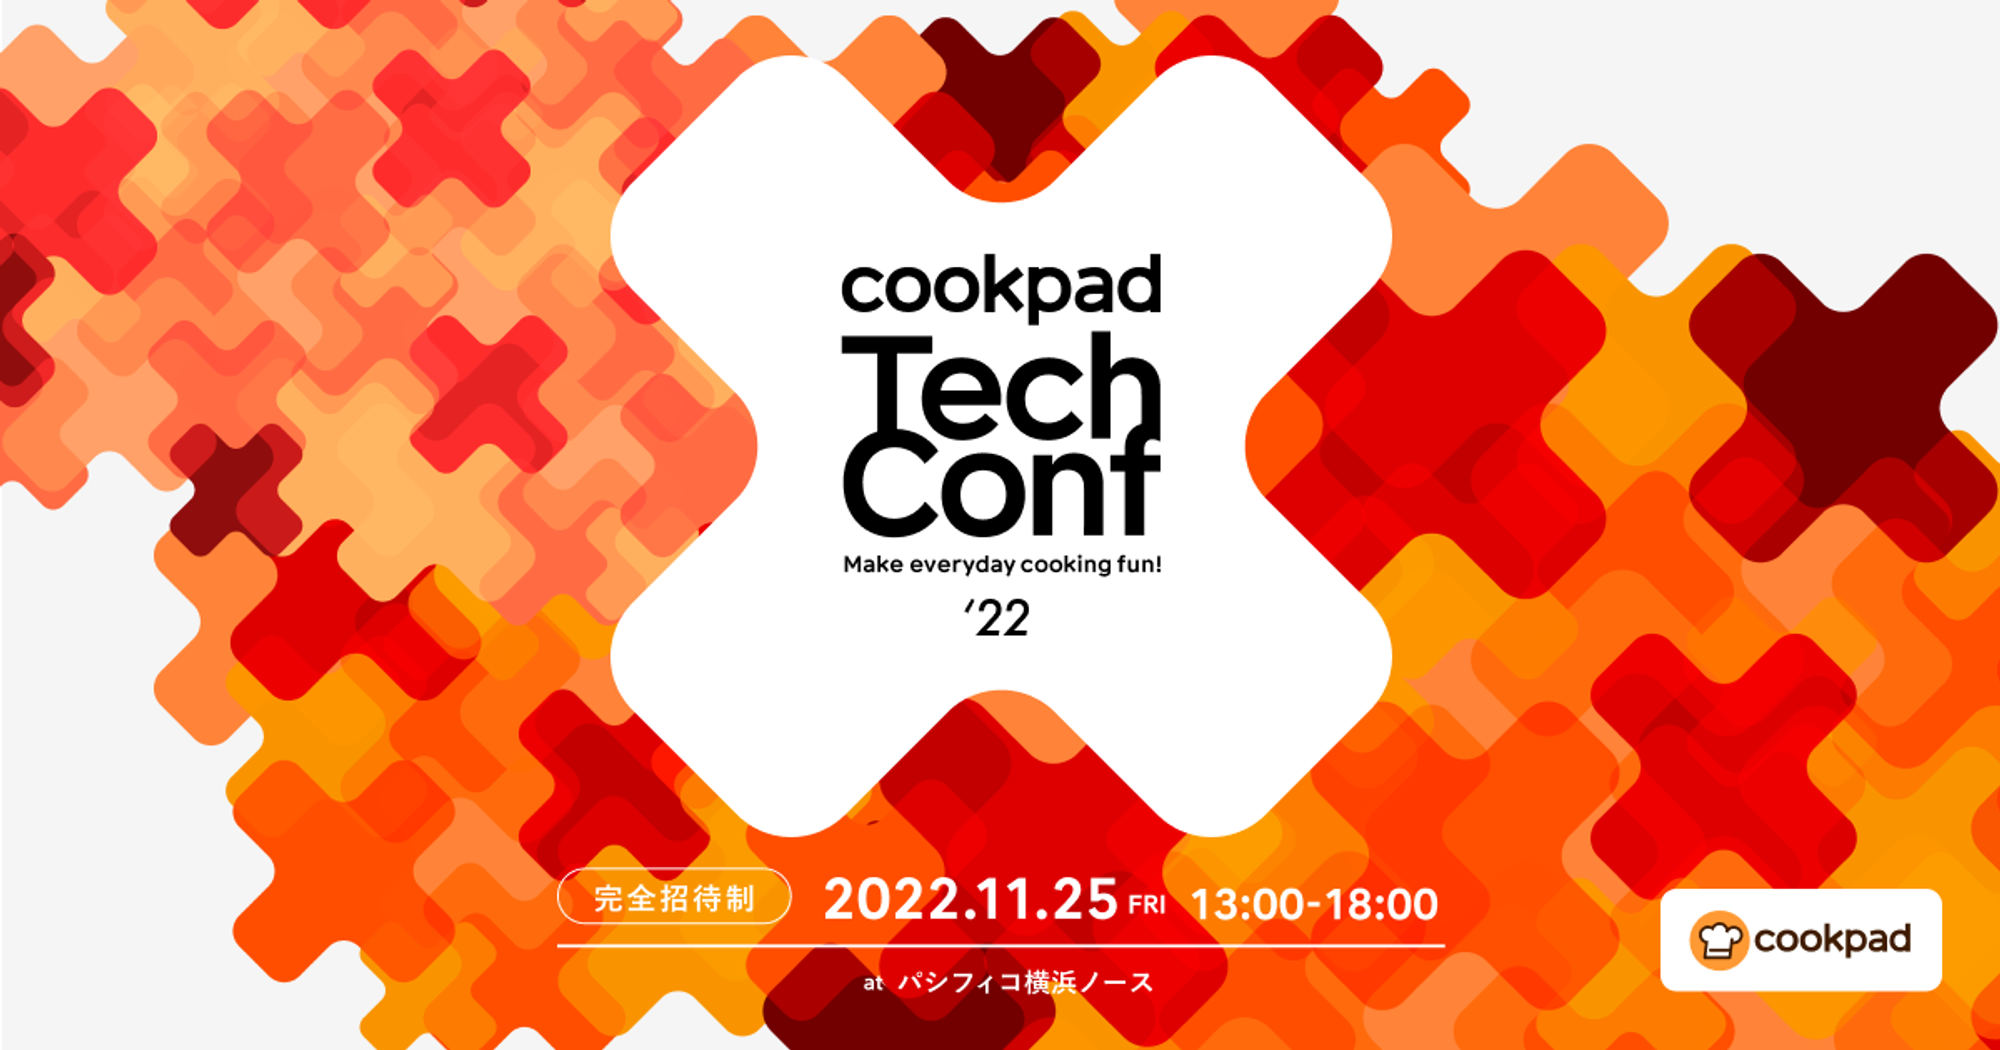 Cookpad TechConf 2022